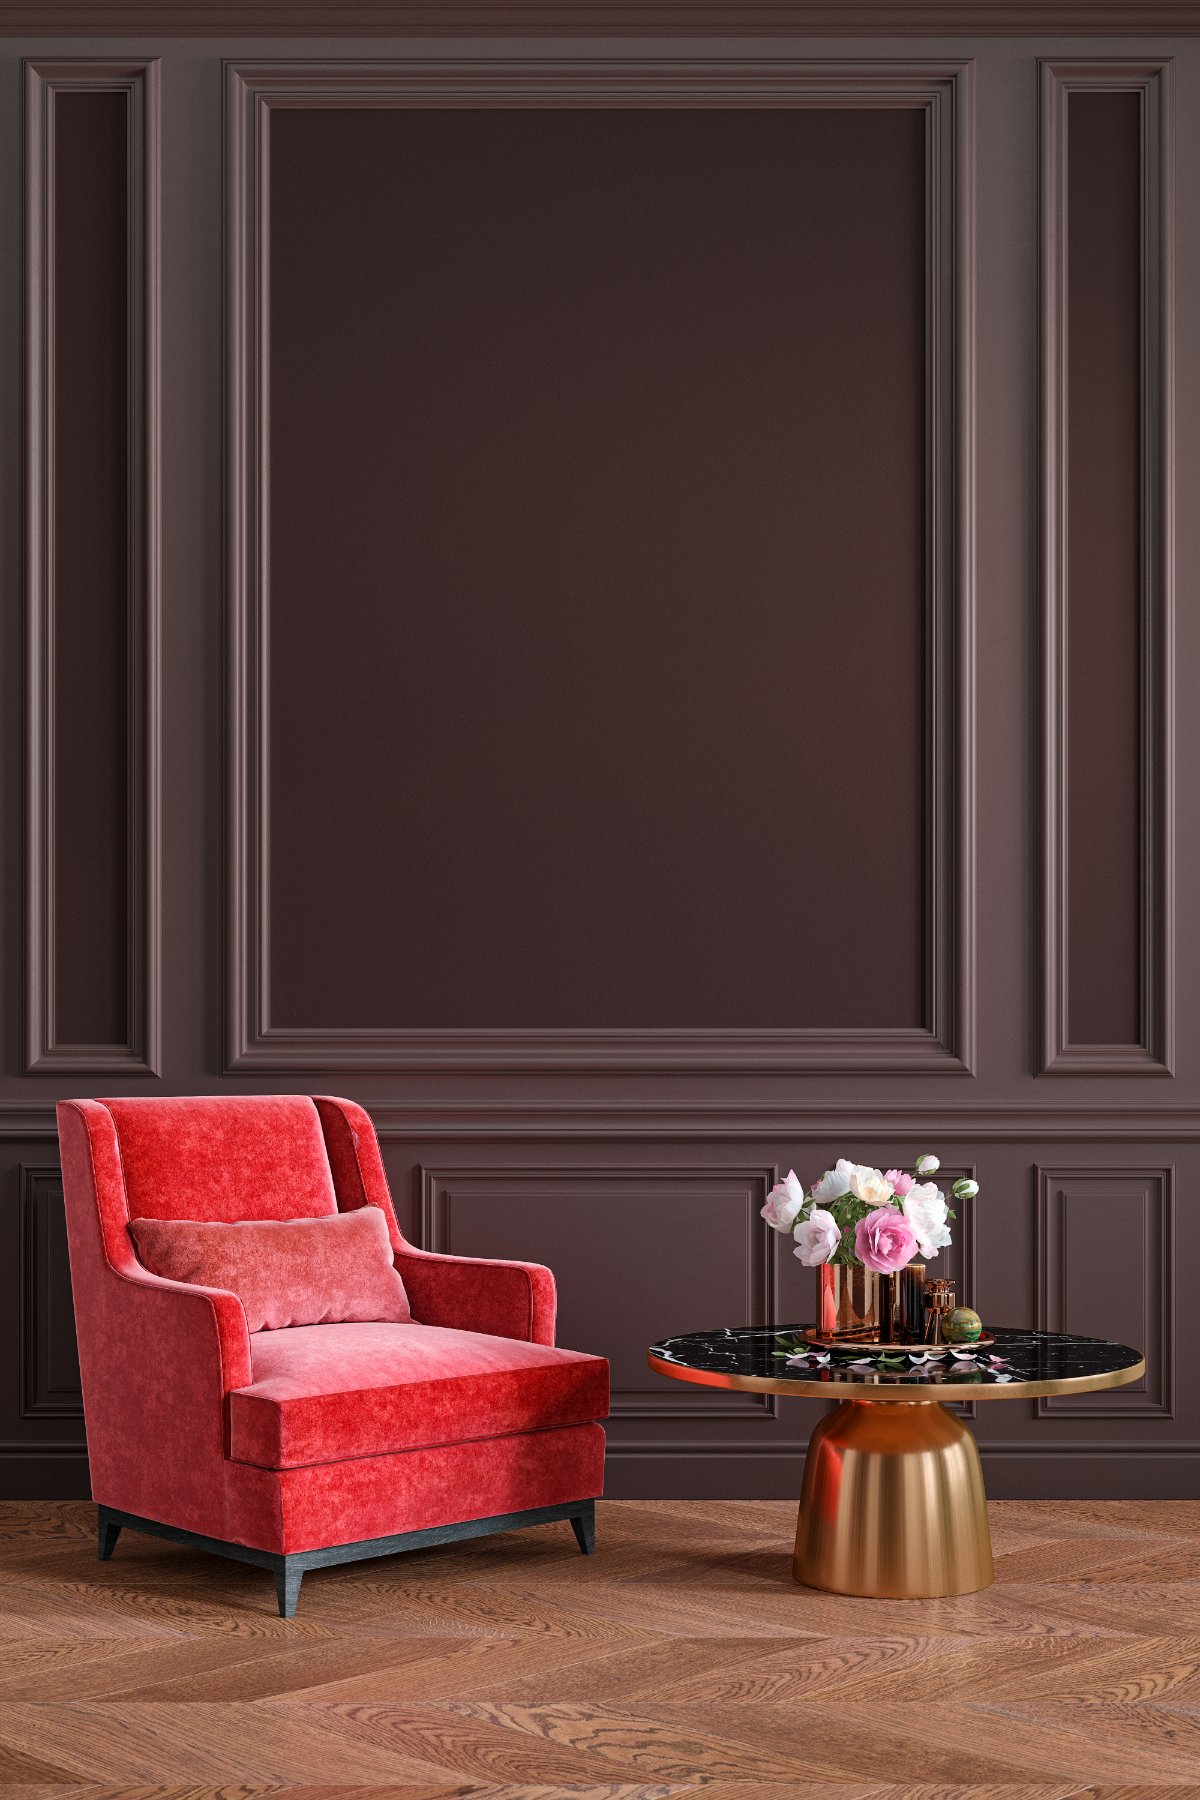 Dark-Chocolate-Brown-Red-Living-Room